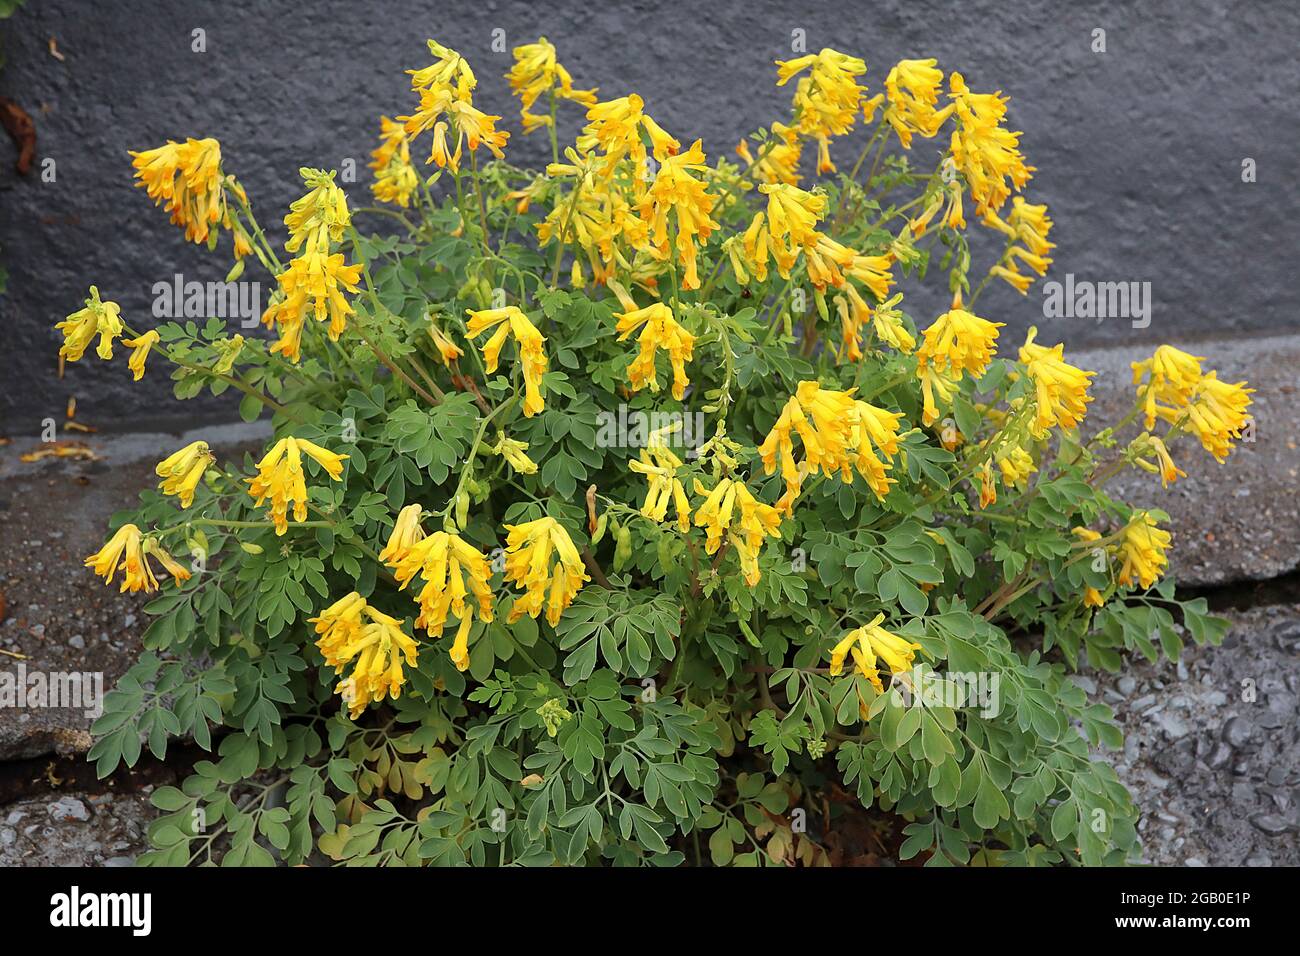 Corydalis lutea yellow Fumitory – yellow tubular flowers on thick stems,  June, England, UK Stock Photo